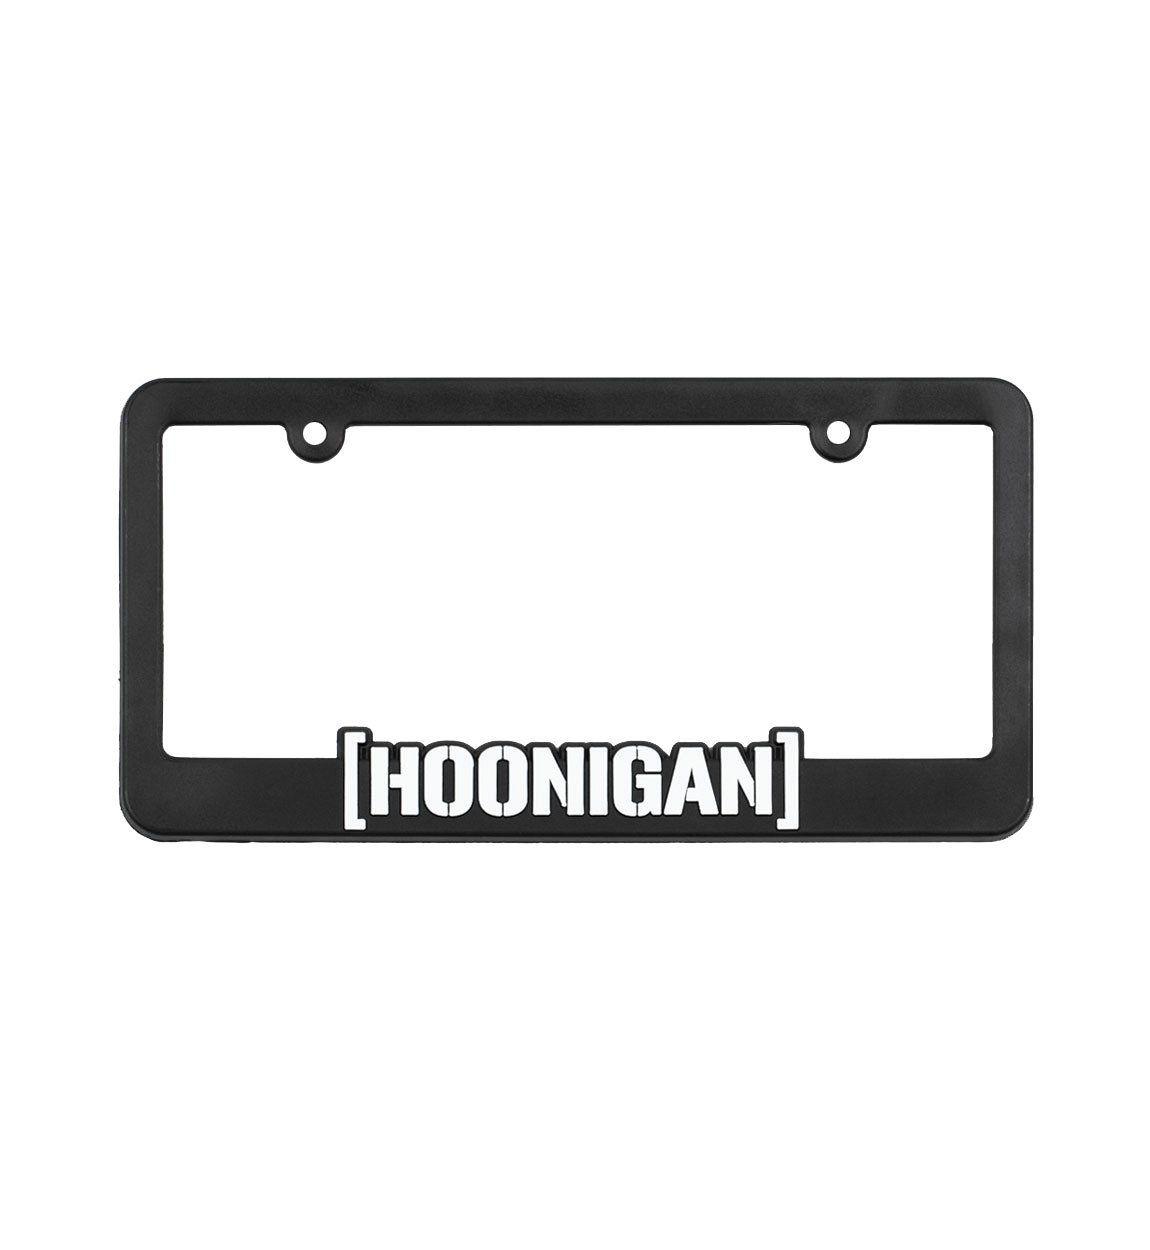 Hoonigan Logo - BRACKET LOGO PLATE FRAME